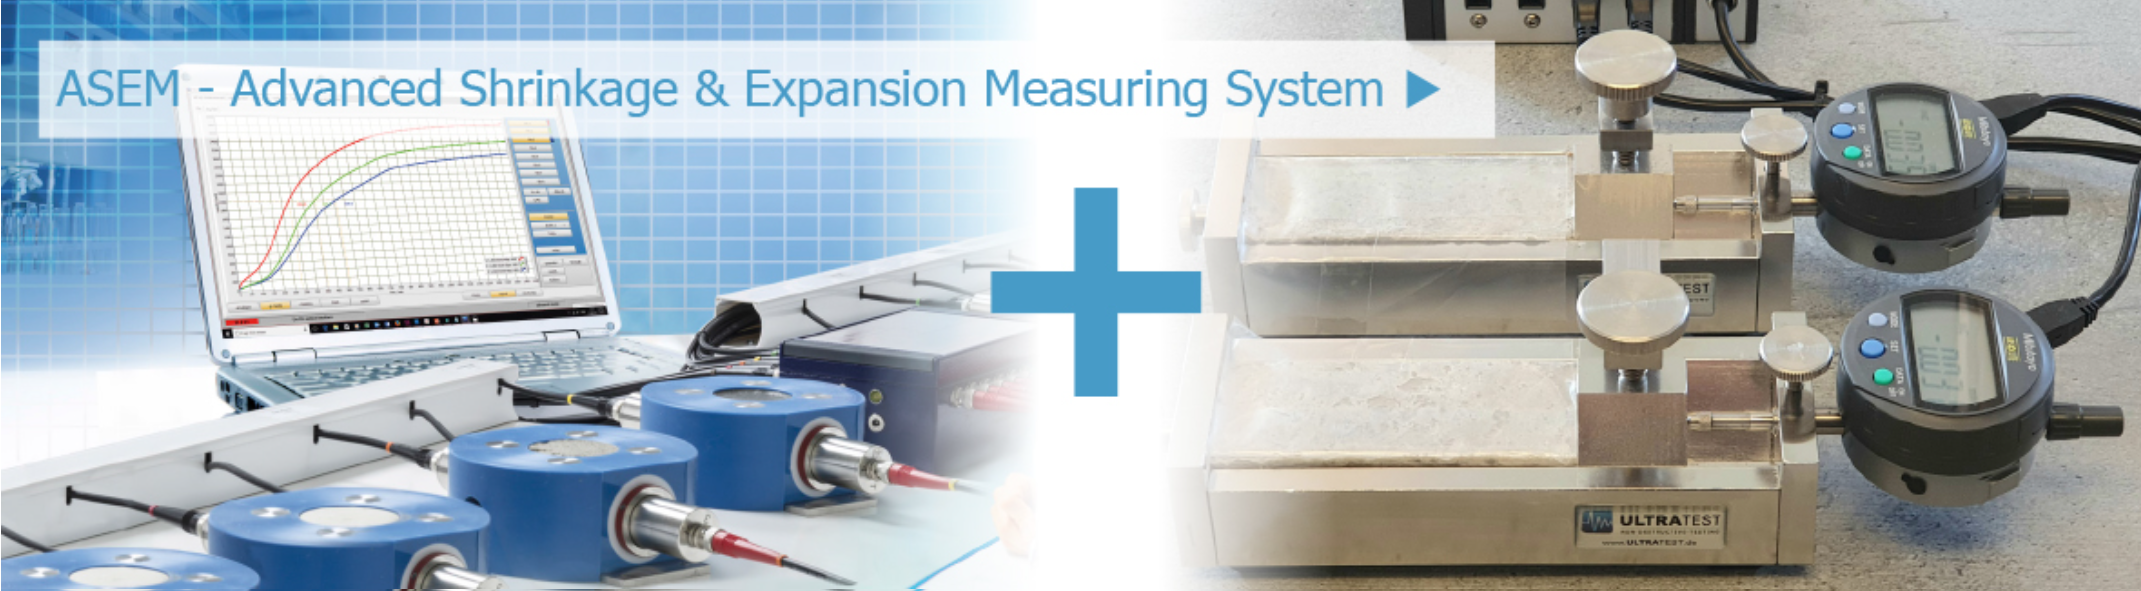 德国UltraTest -ASEM – Advanced Shrinkage & Expansion Measuring System – 砂浆收缩和膨胀测量系统-用于IP-8超声波测量系统